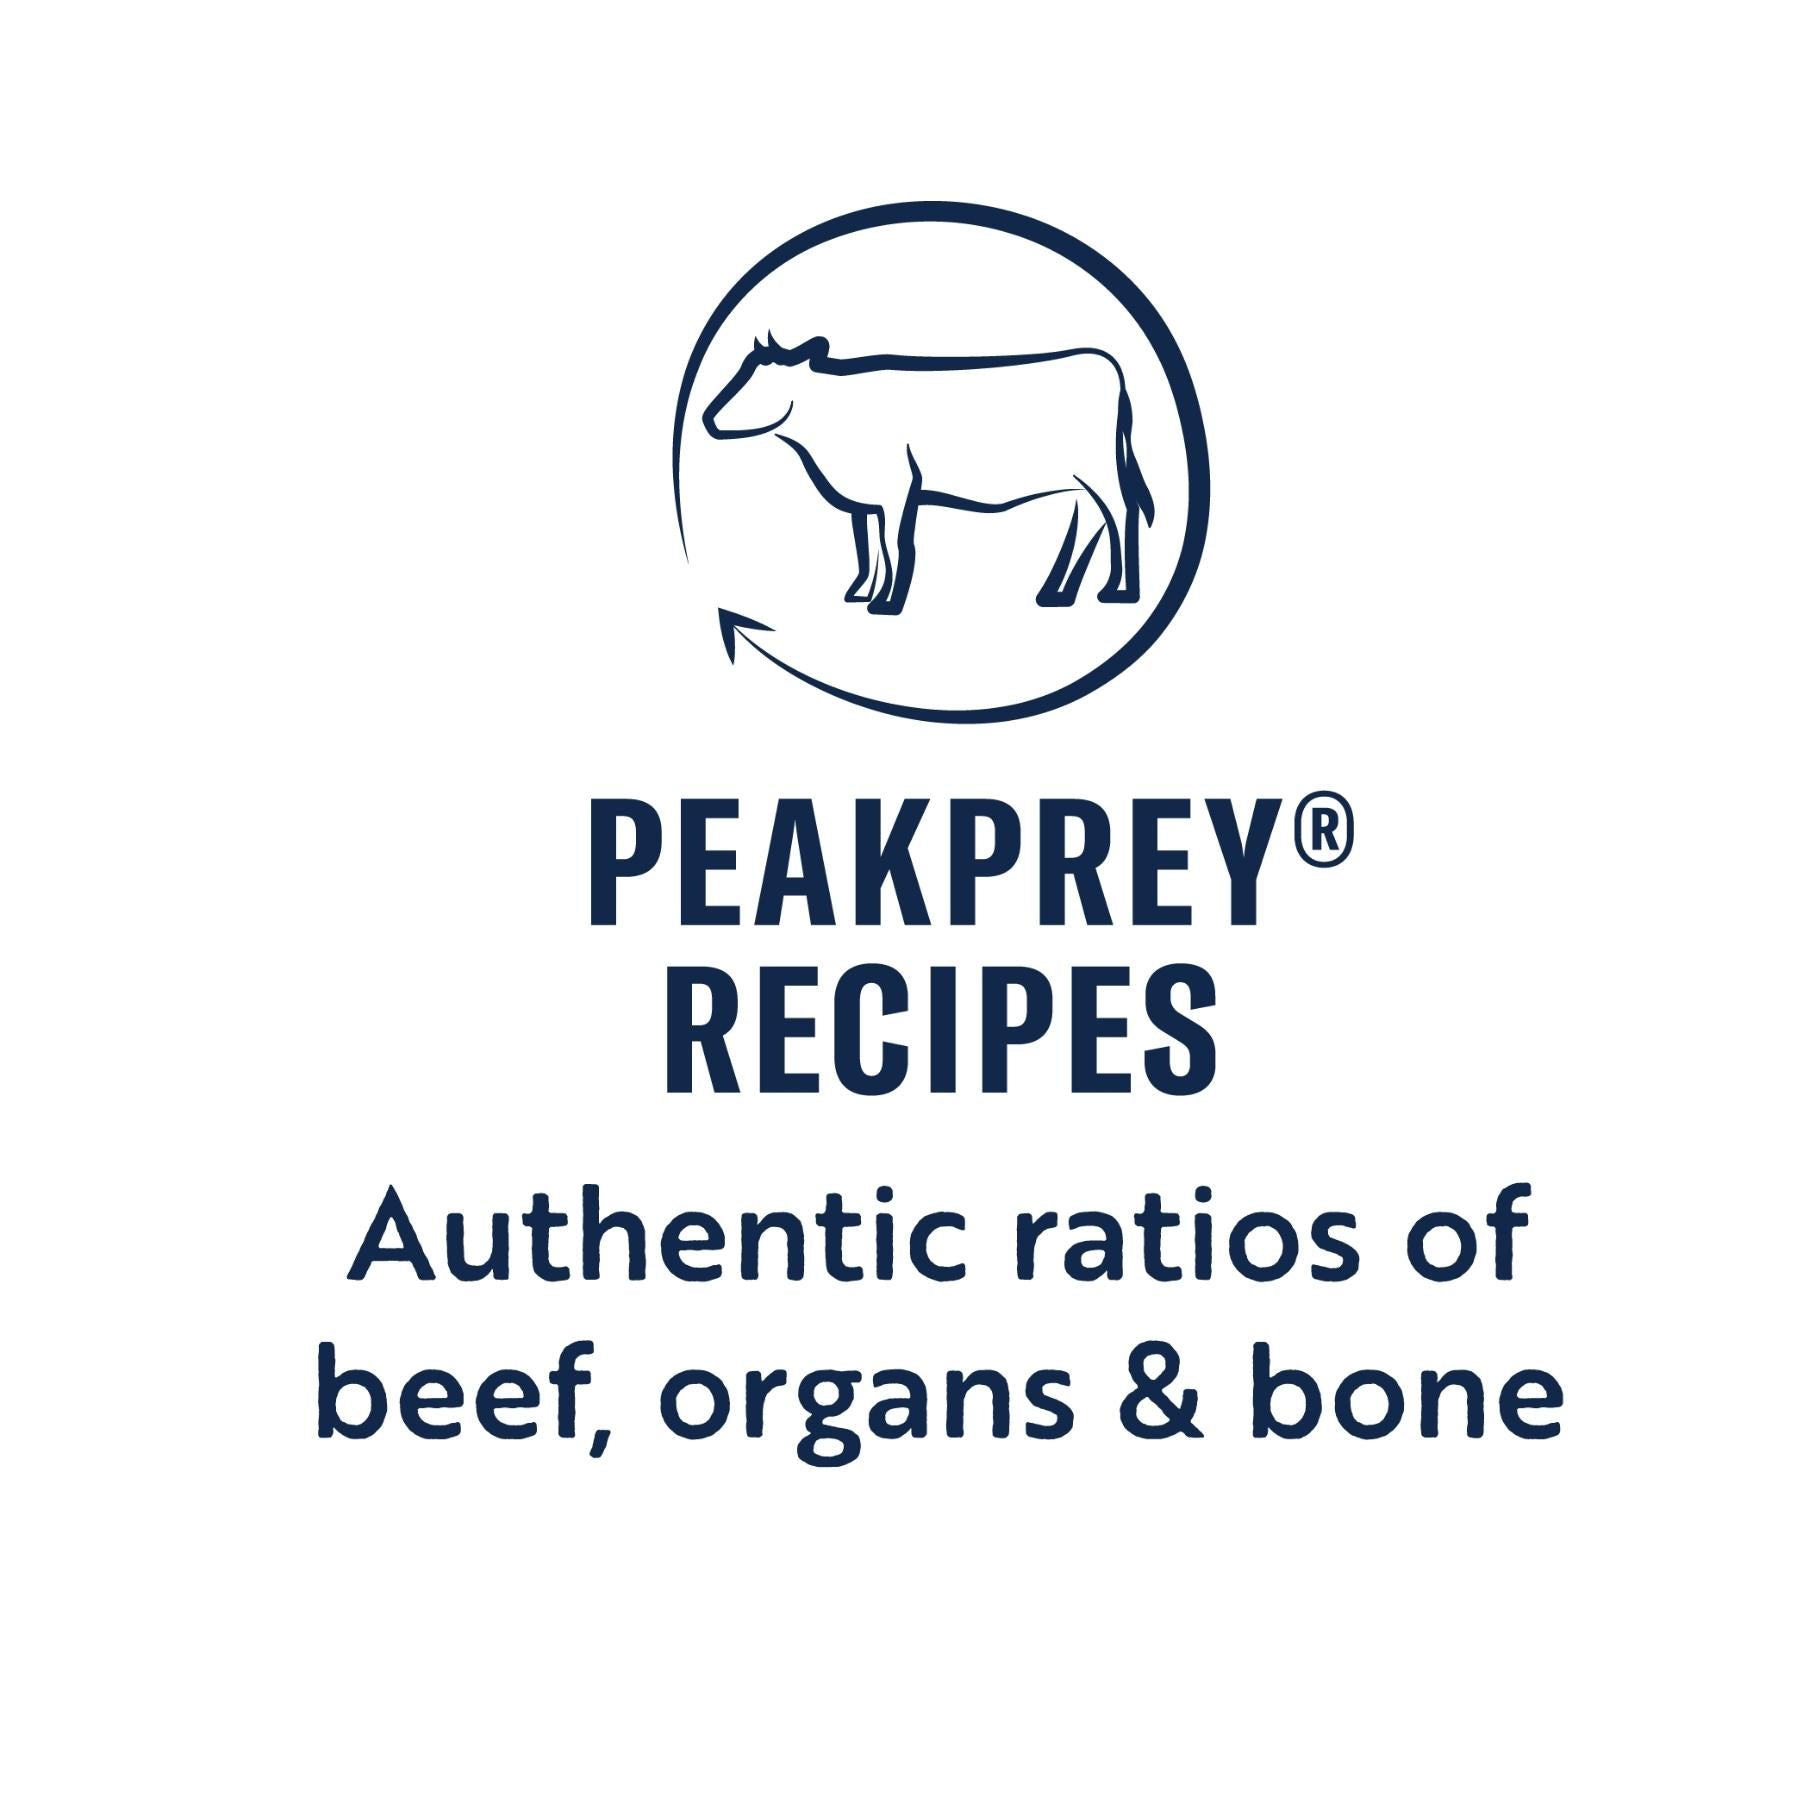 ZIWI Peak Dry Dog Food Beef PeakPrey Recipe.